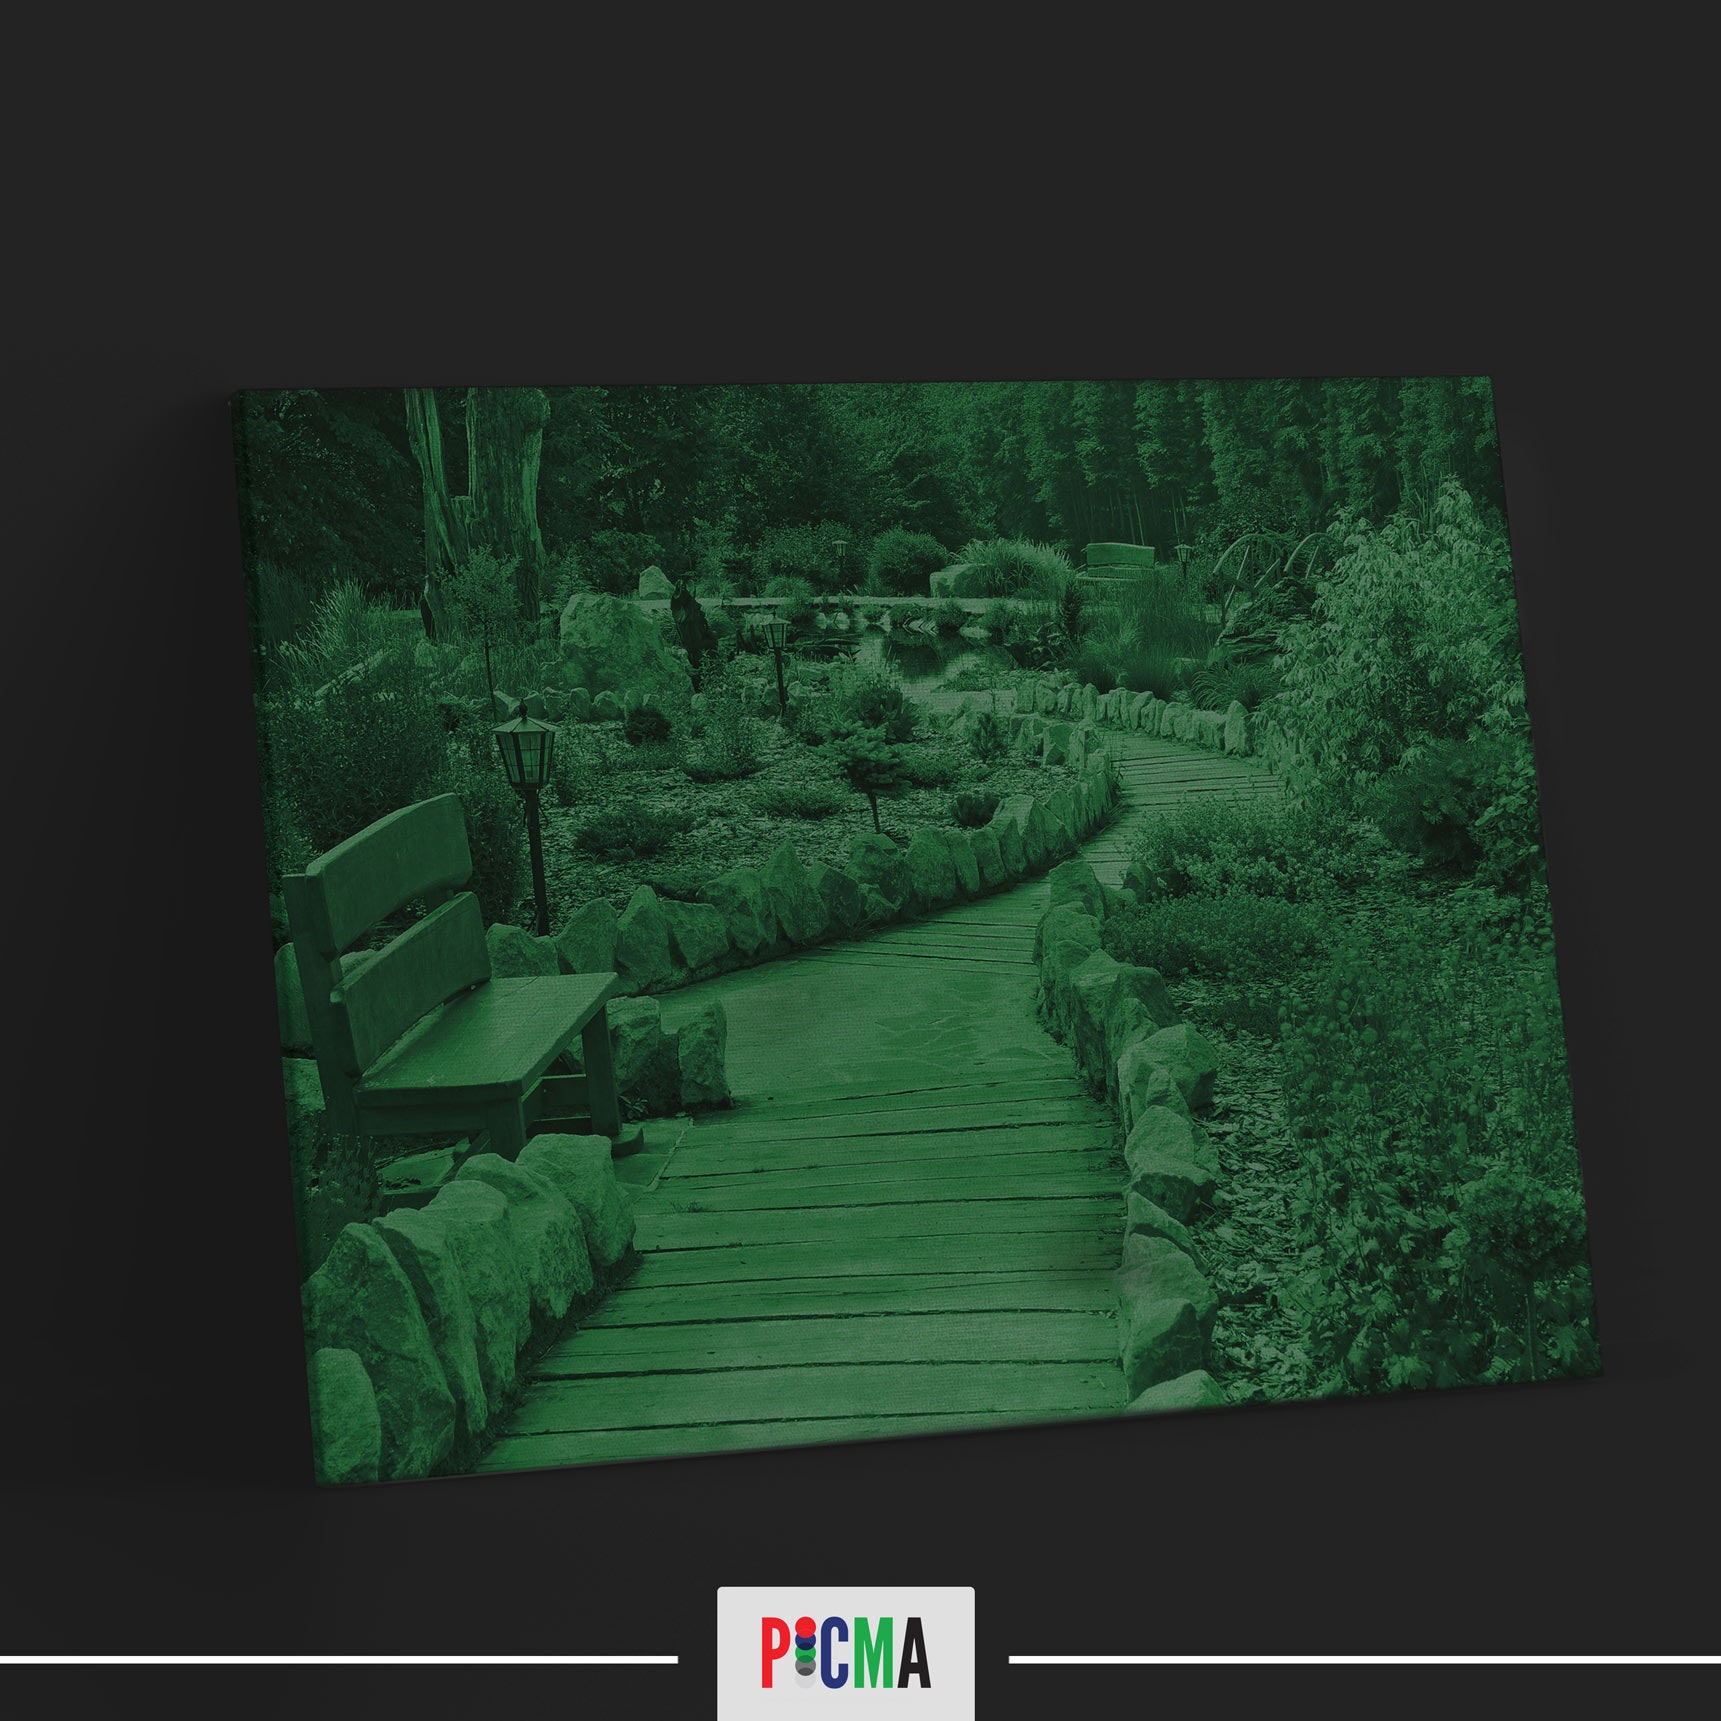 Tablou canvas luminos Alee in parc, Picma, dualview, panza + sasiu lemn, 60 x 90 cm